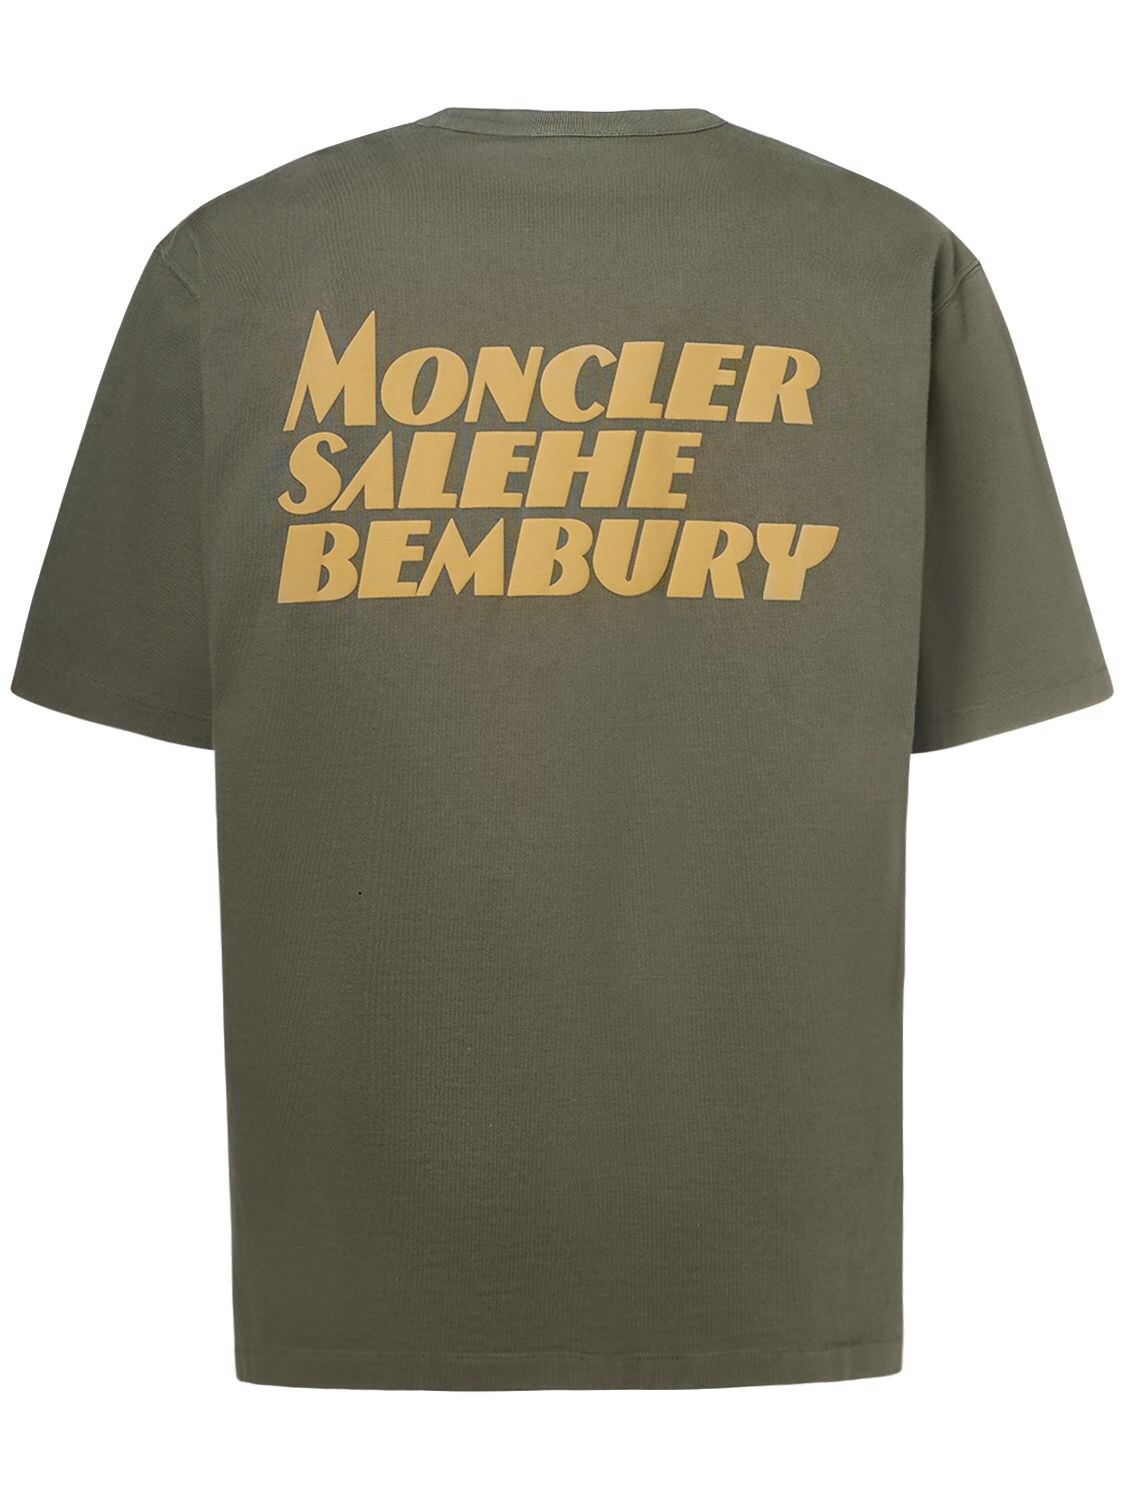 MONCLER X SALEHE BEMBURY棉质T恤